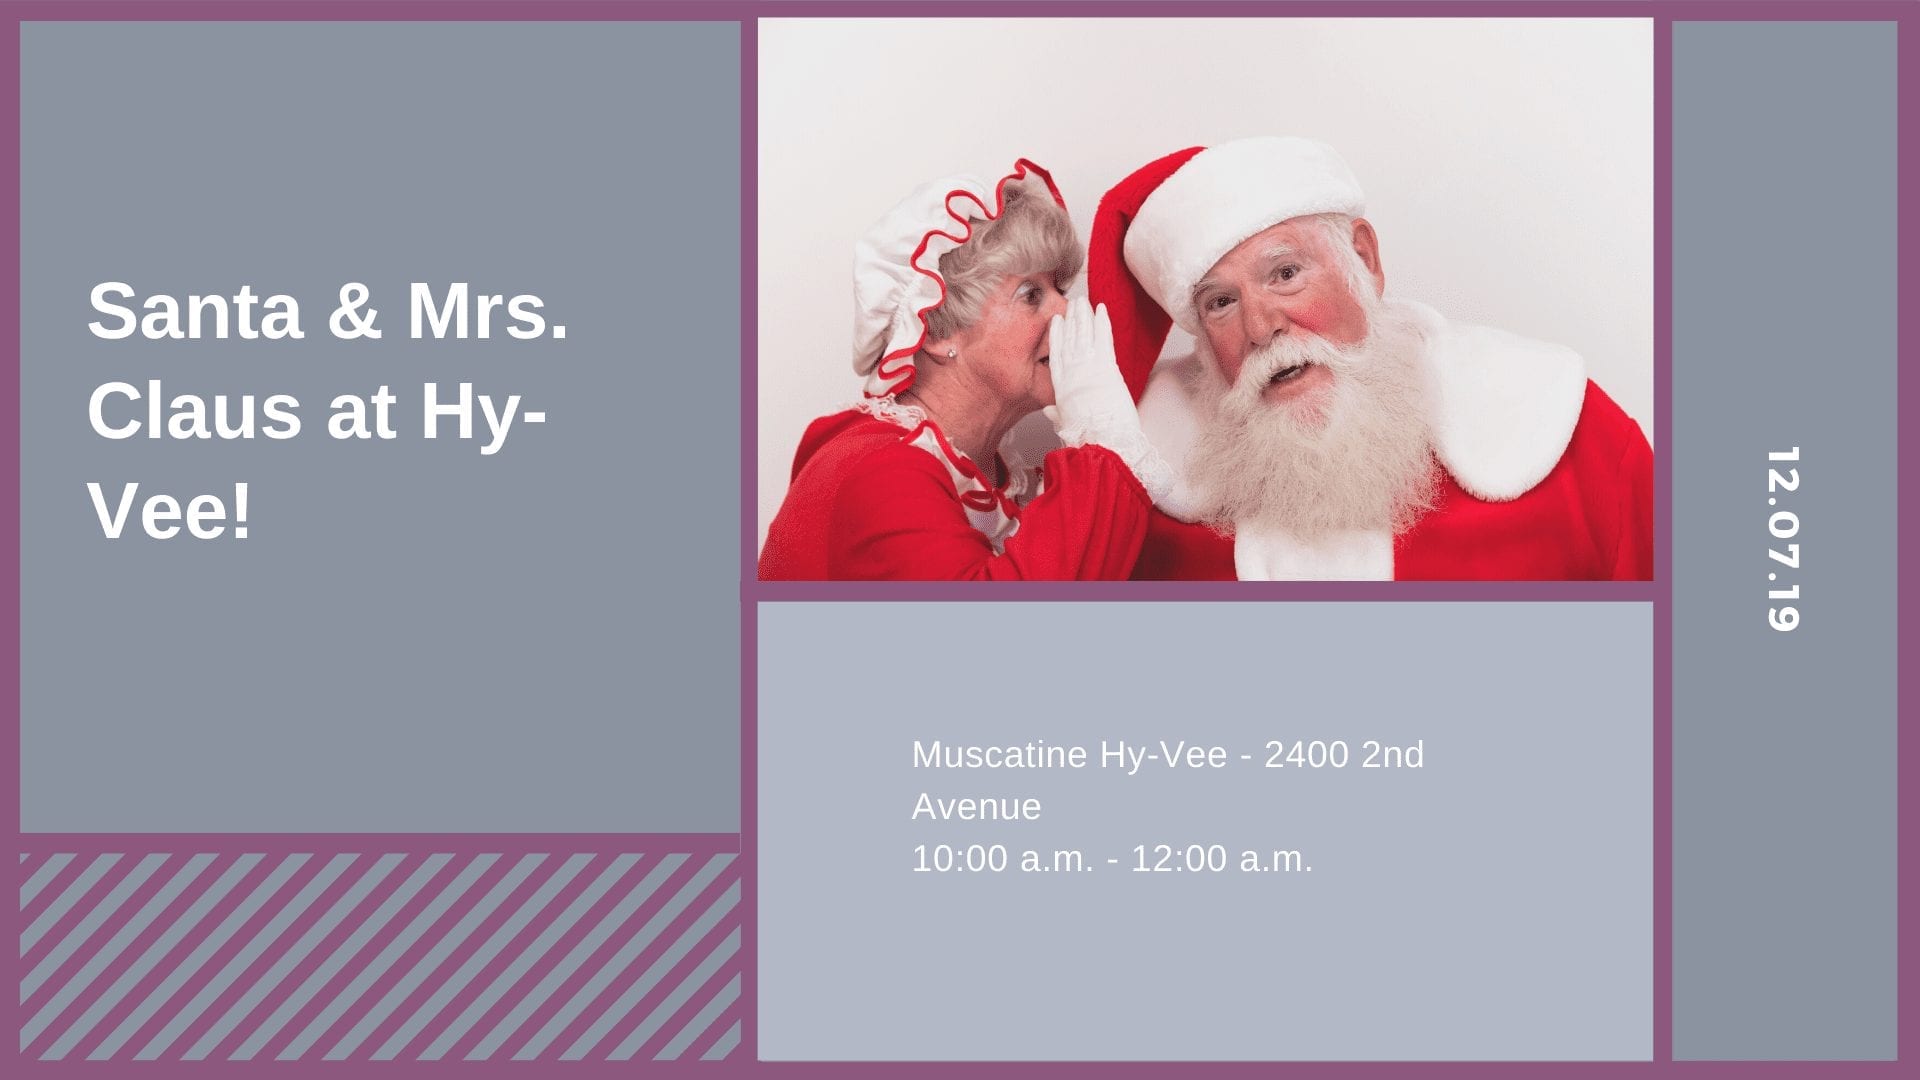 Santa & Mrs. Claus at Hy-Vee!